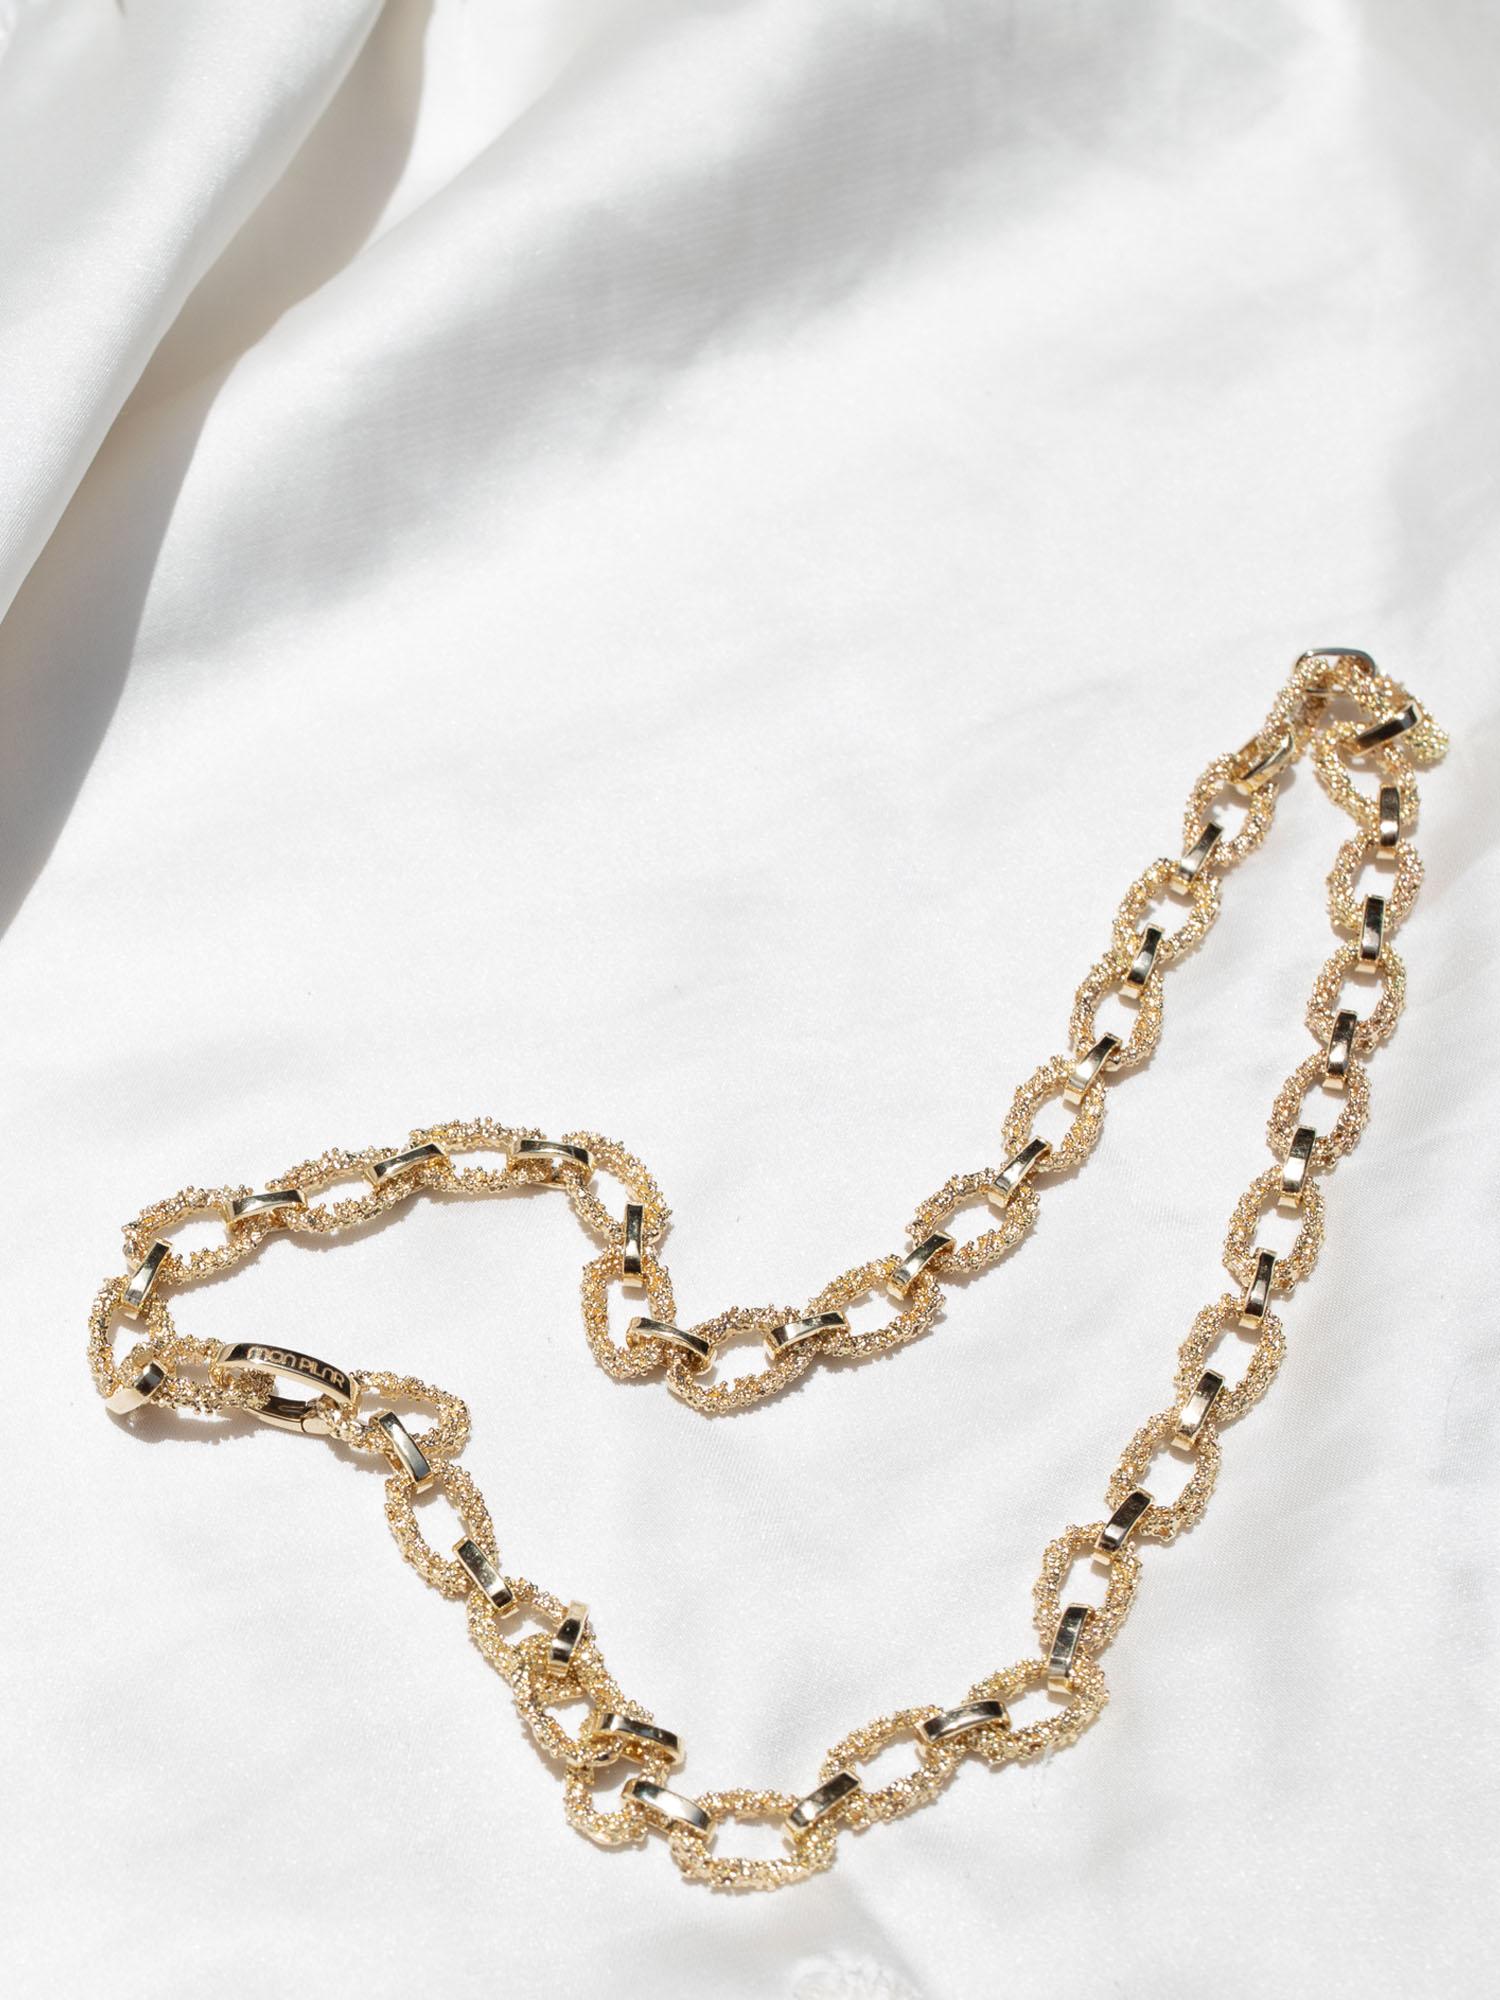 Etruscan Revival 14 Karat Gold Etruscan Granulation Chain Link Necklace by Mon Pilar For Sale